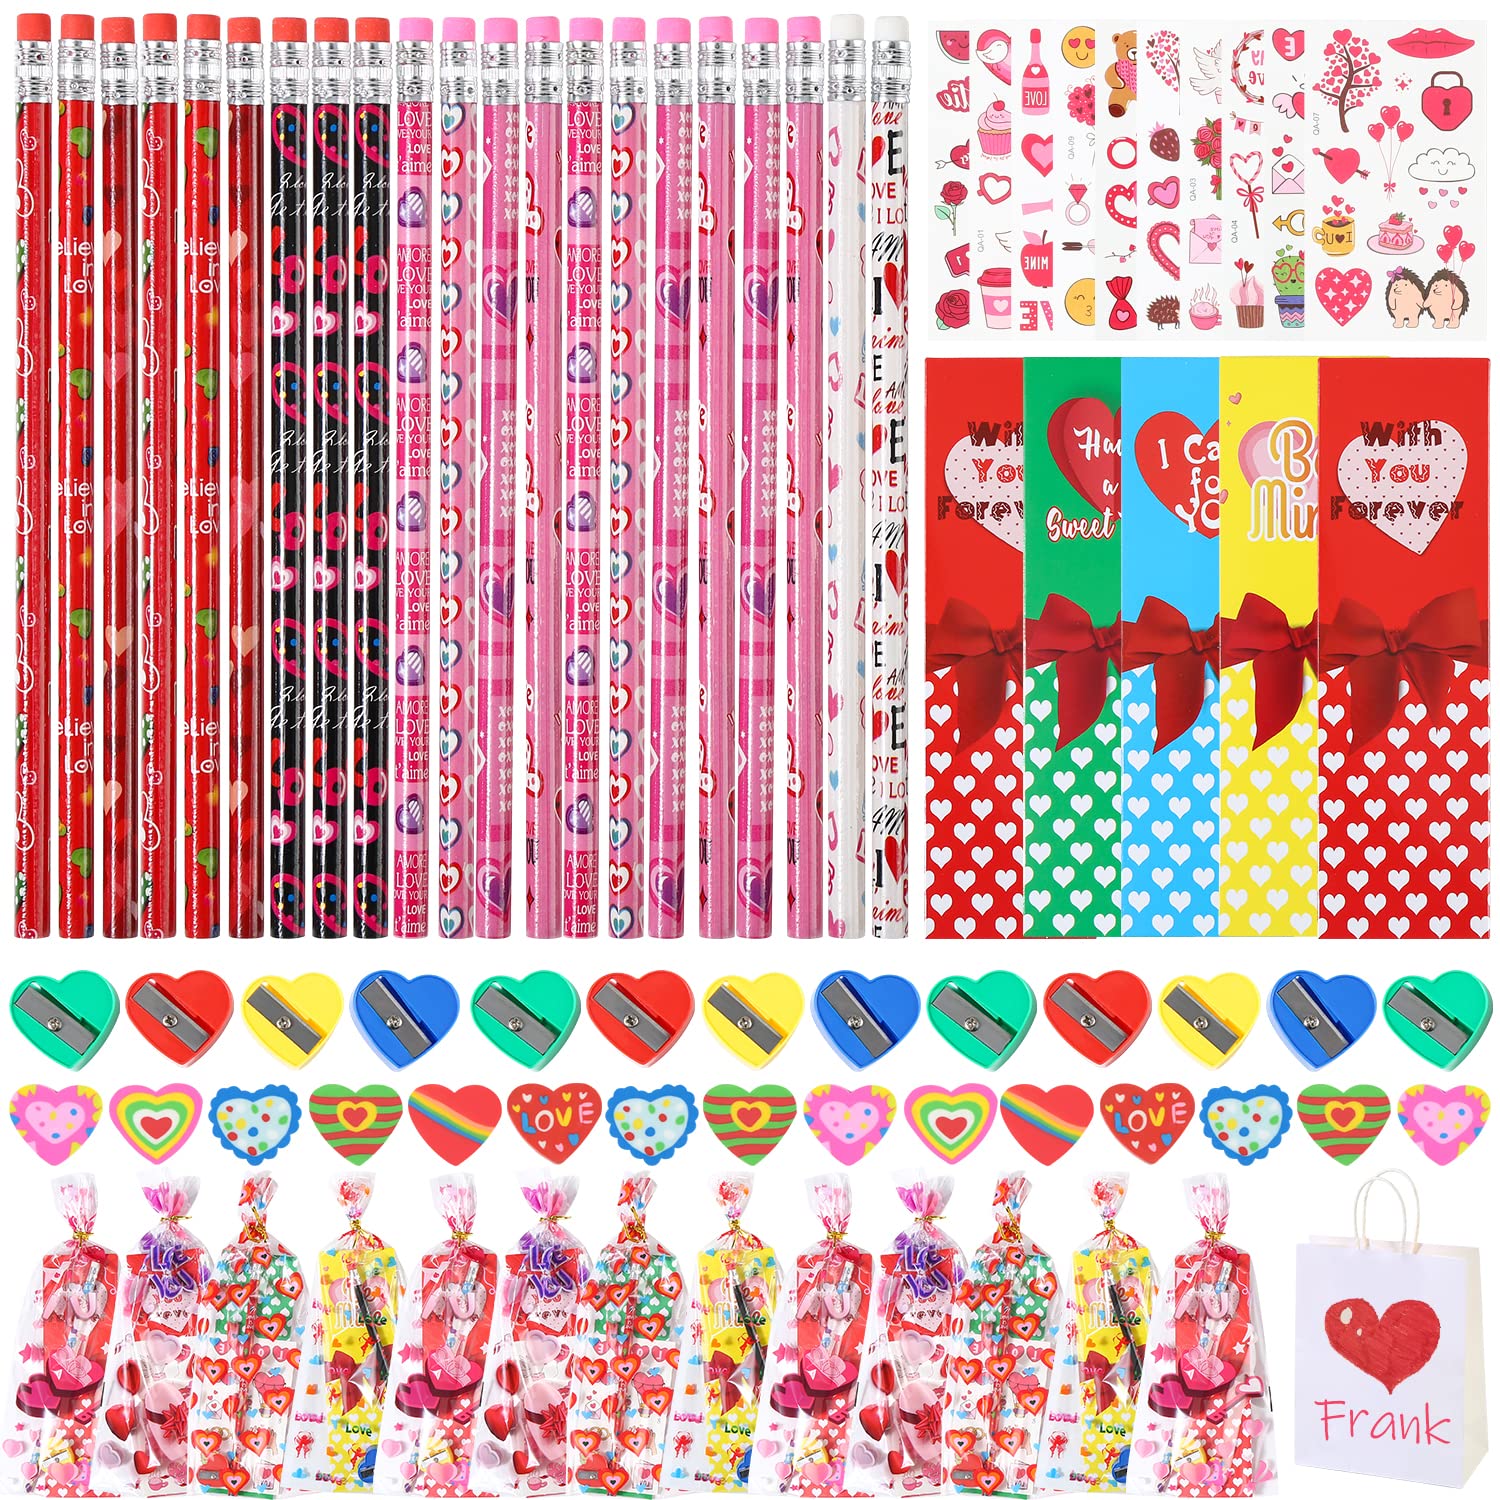 DOBKDTUYS 0 Valentines Gifts For Kids Classroom, 28Pack Valentines  Stationery Set Includes Valentines Exchange Cards, Valentines Pencils Era